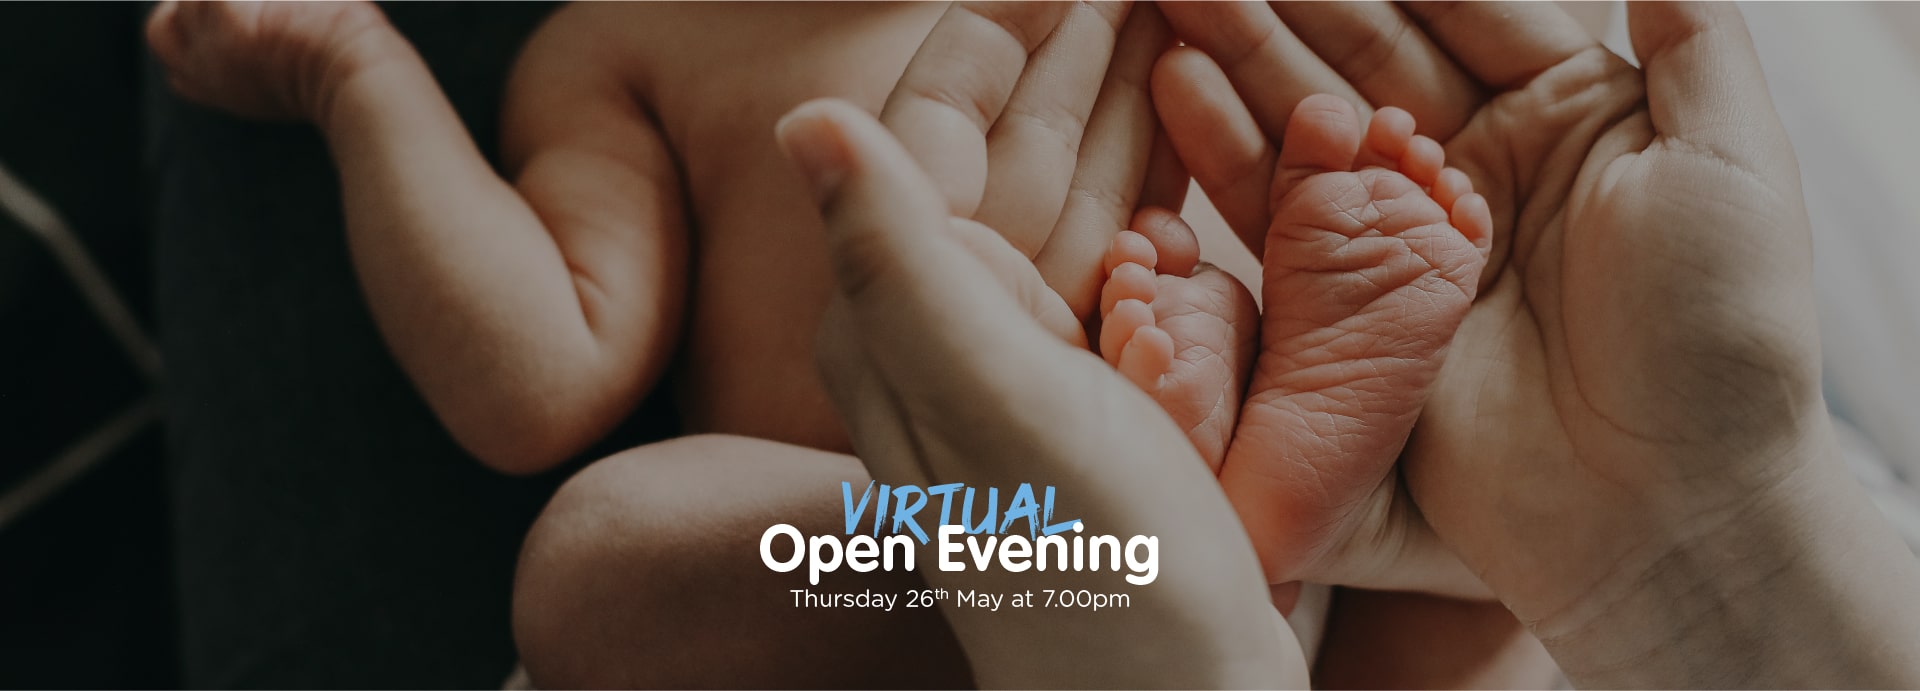 Open evening online